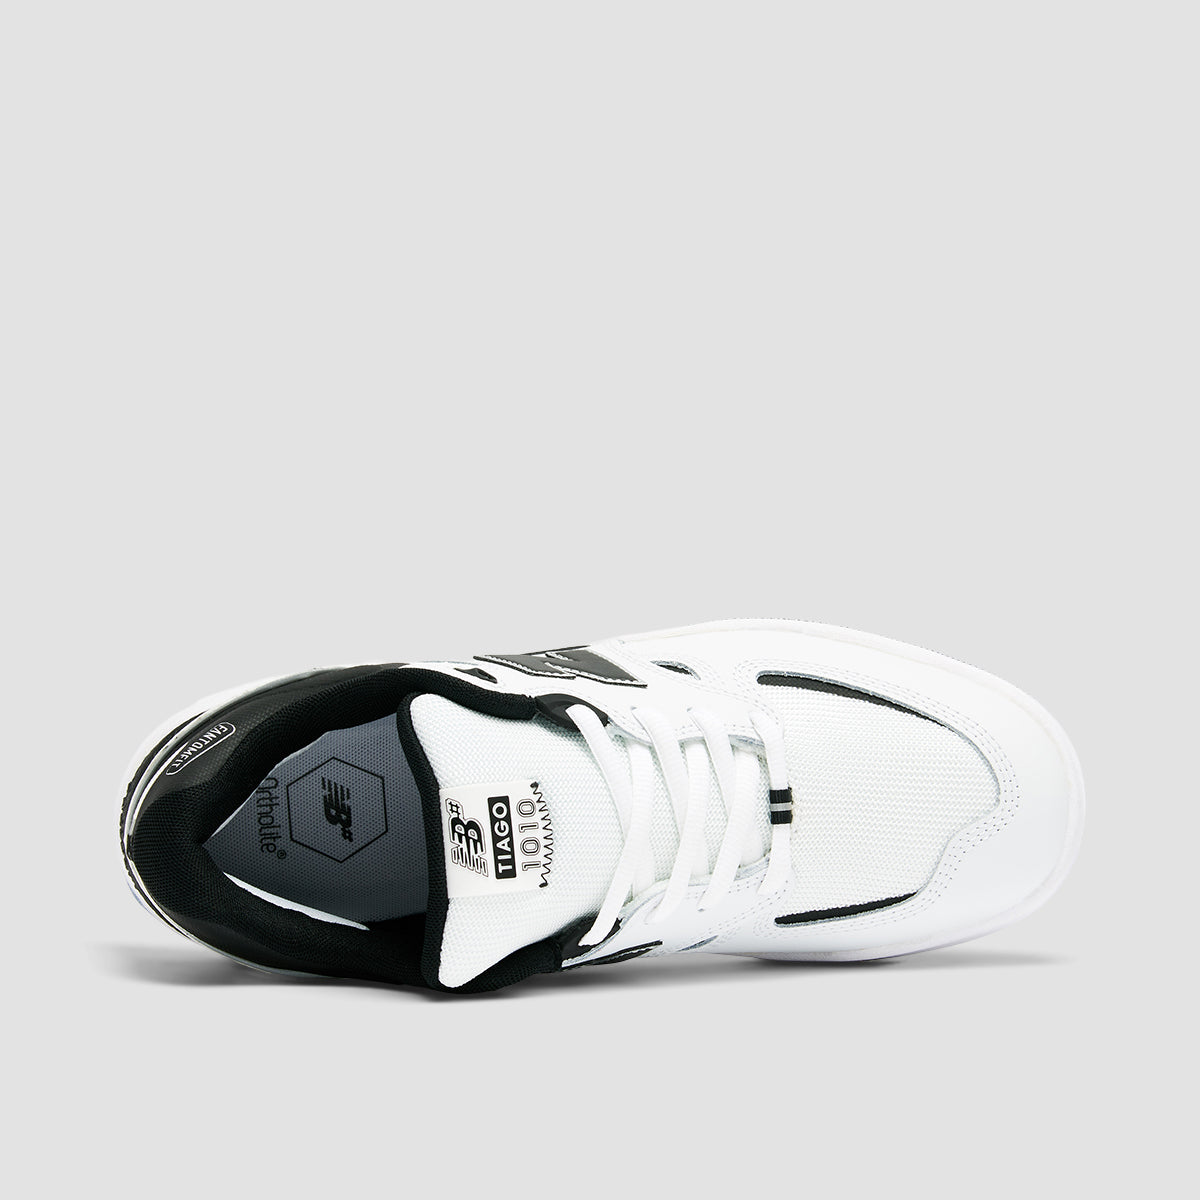 New Balance Numeric 1010 Tiago Lemos Shoes - White/Black